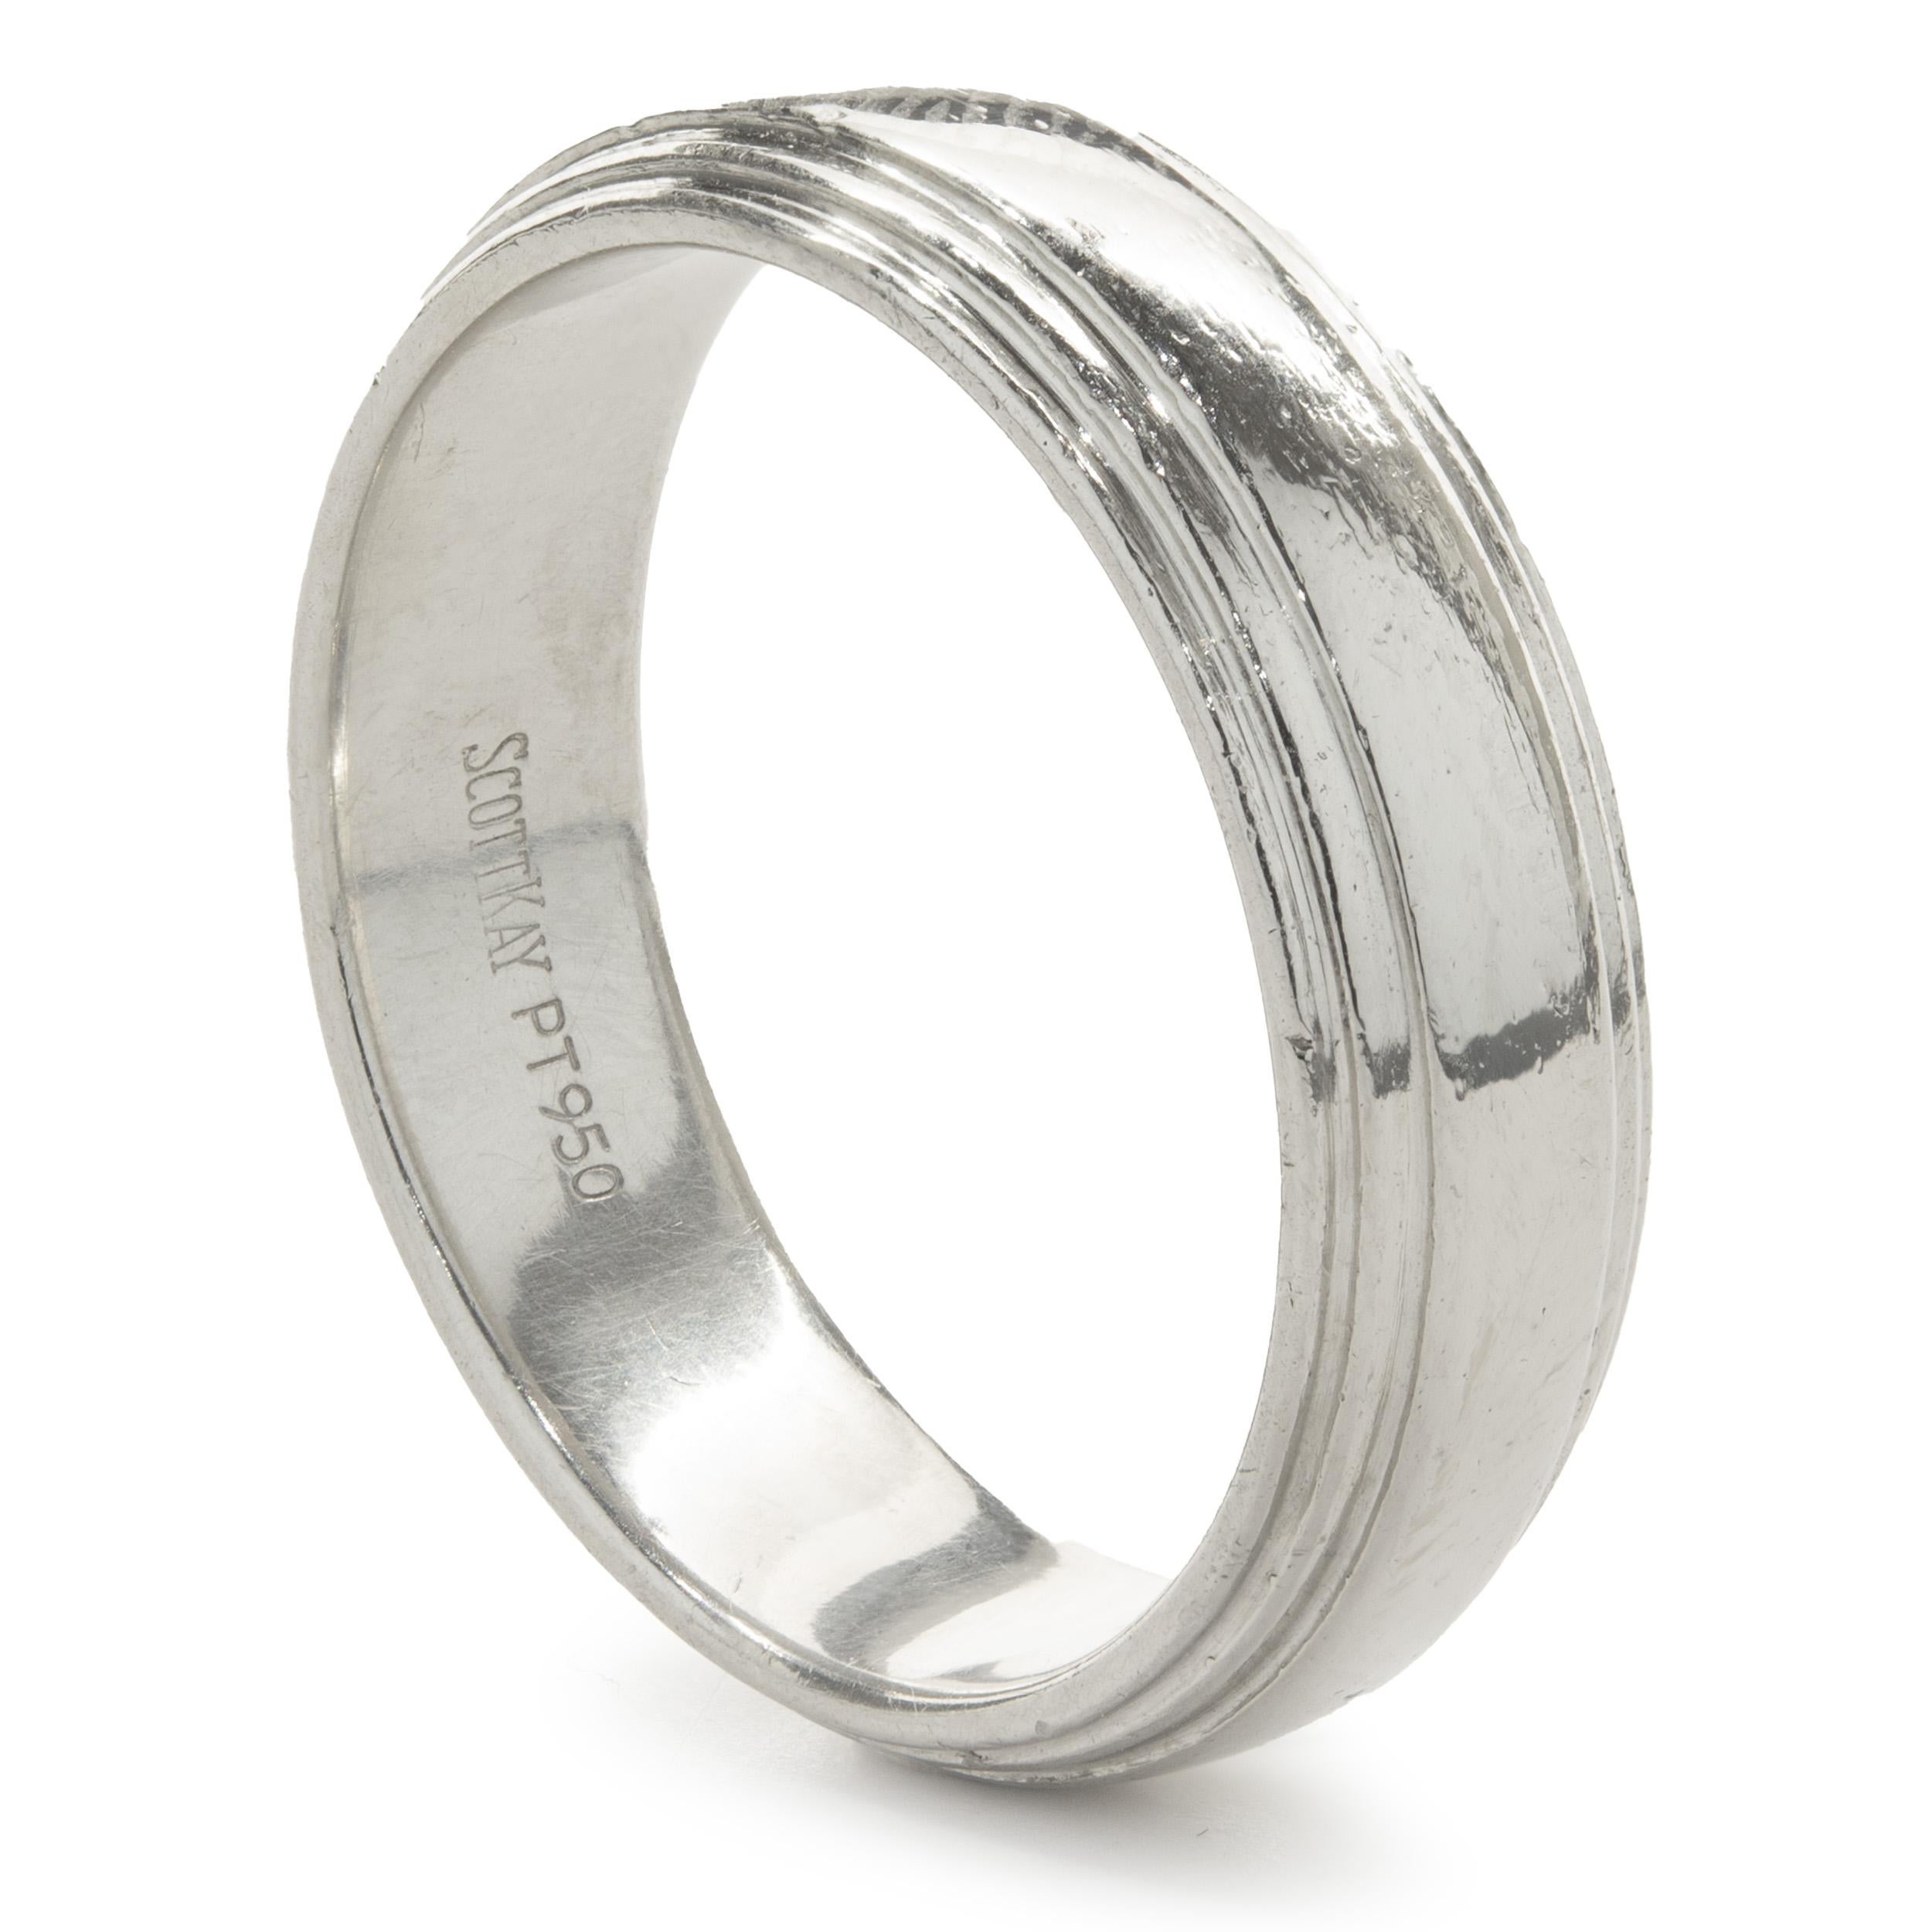 Designer: Scott Kay
Material: platinum 
Dimensions: ring measures 6mm wide
Size: 9.25
Weight: 12.68 grams